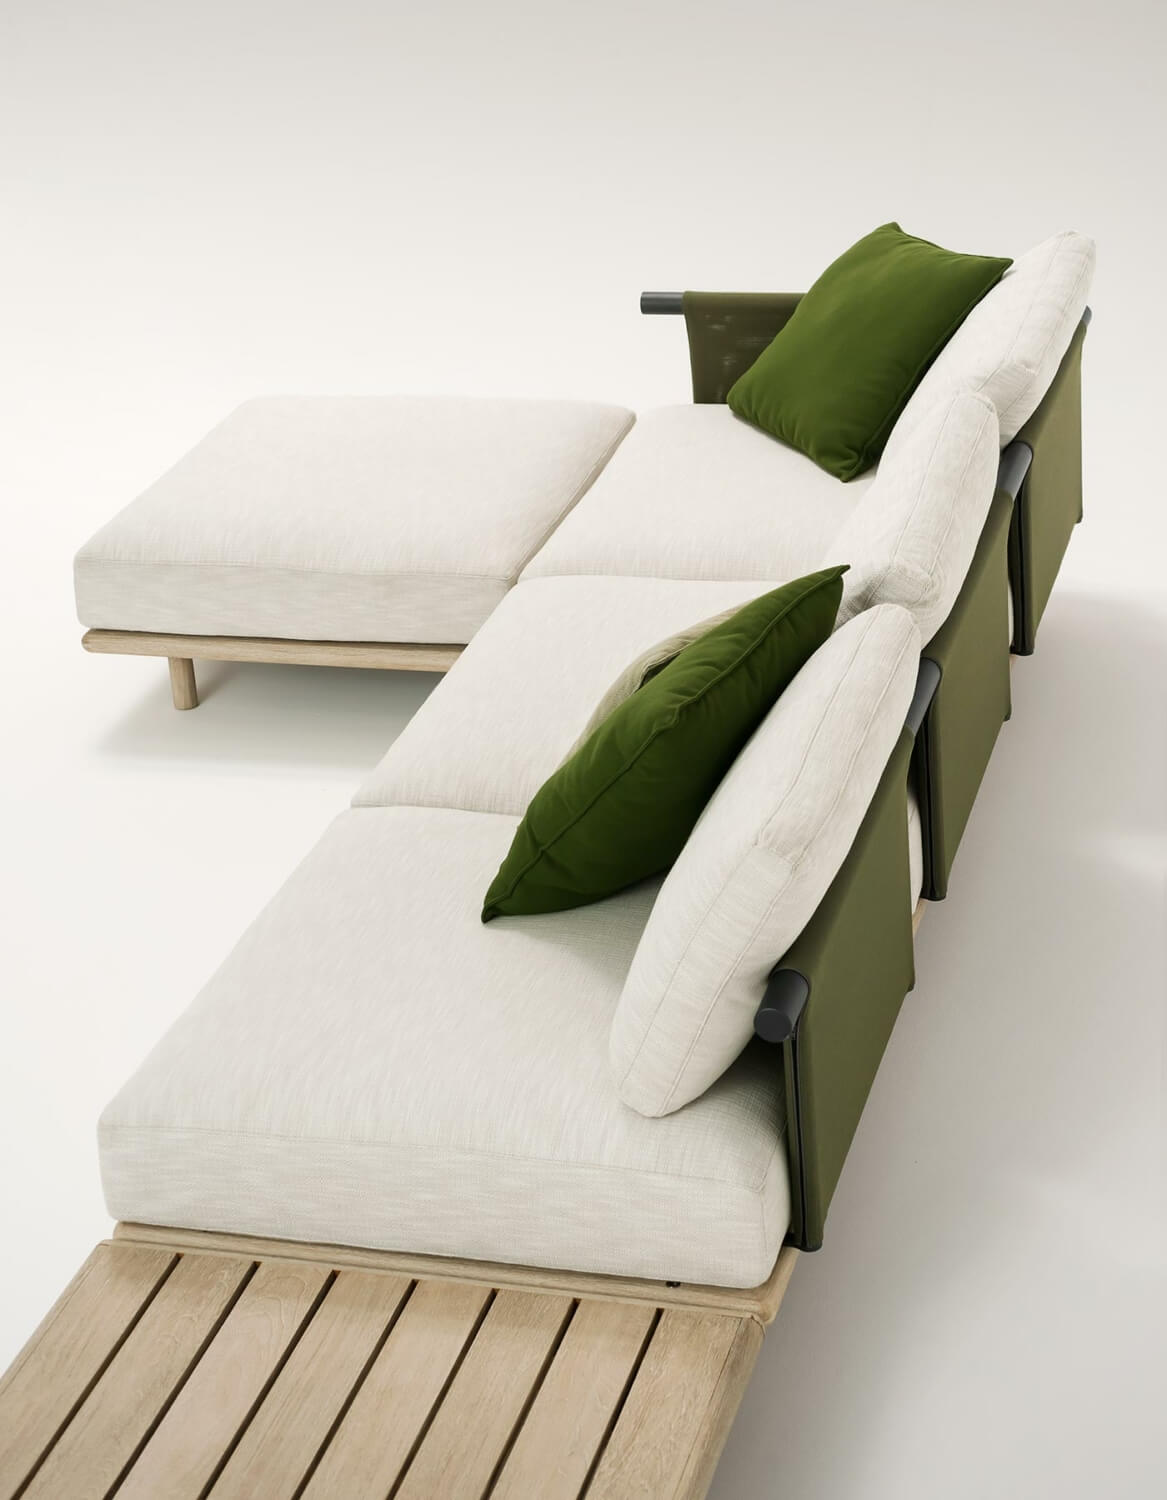 initial Nødvendig Derive RODA: Exclusive outdoor furniture | Italian Design